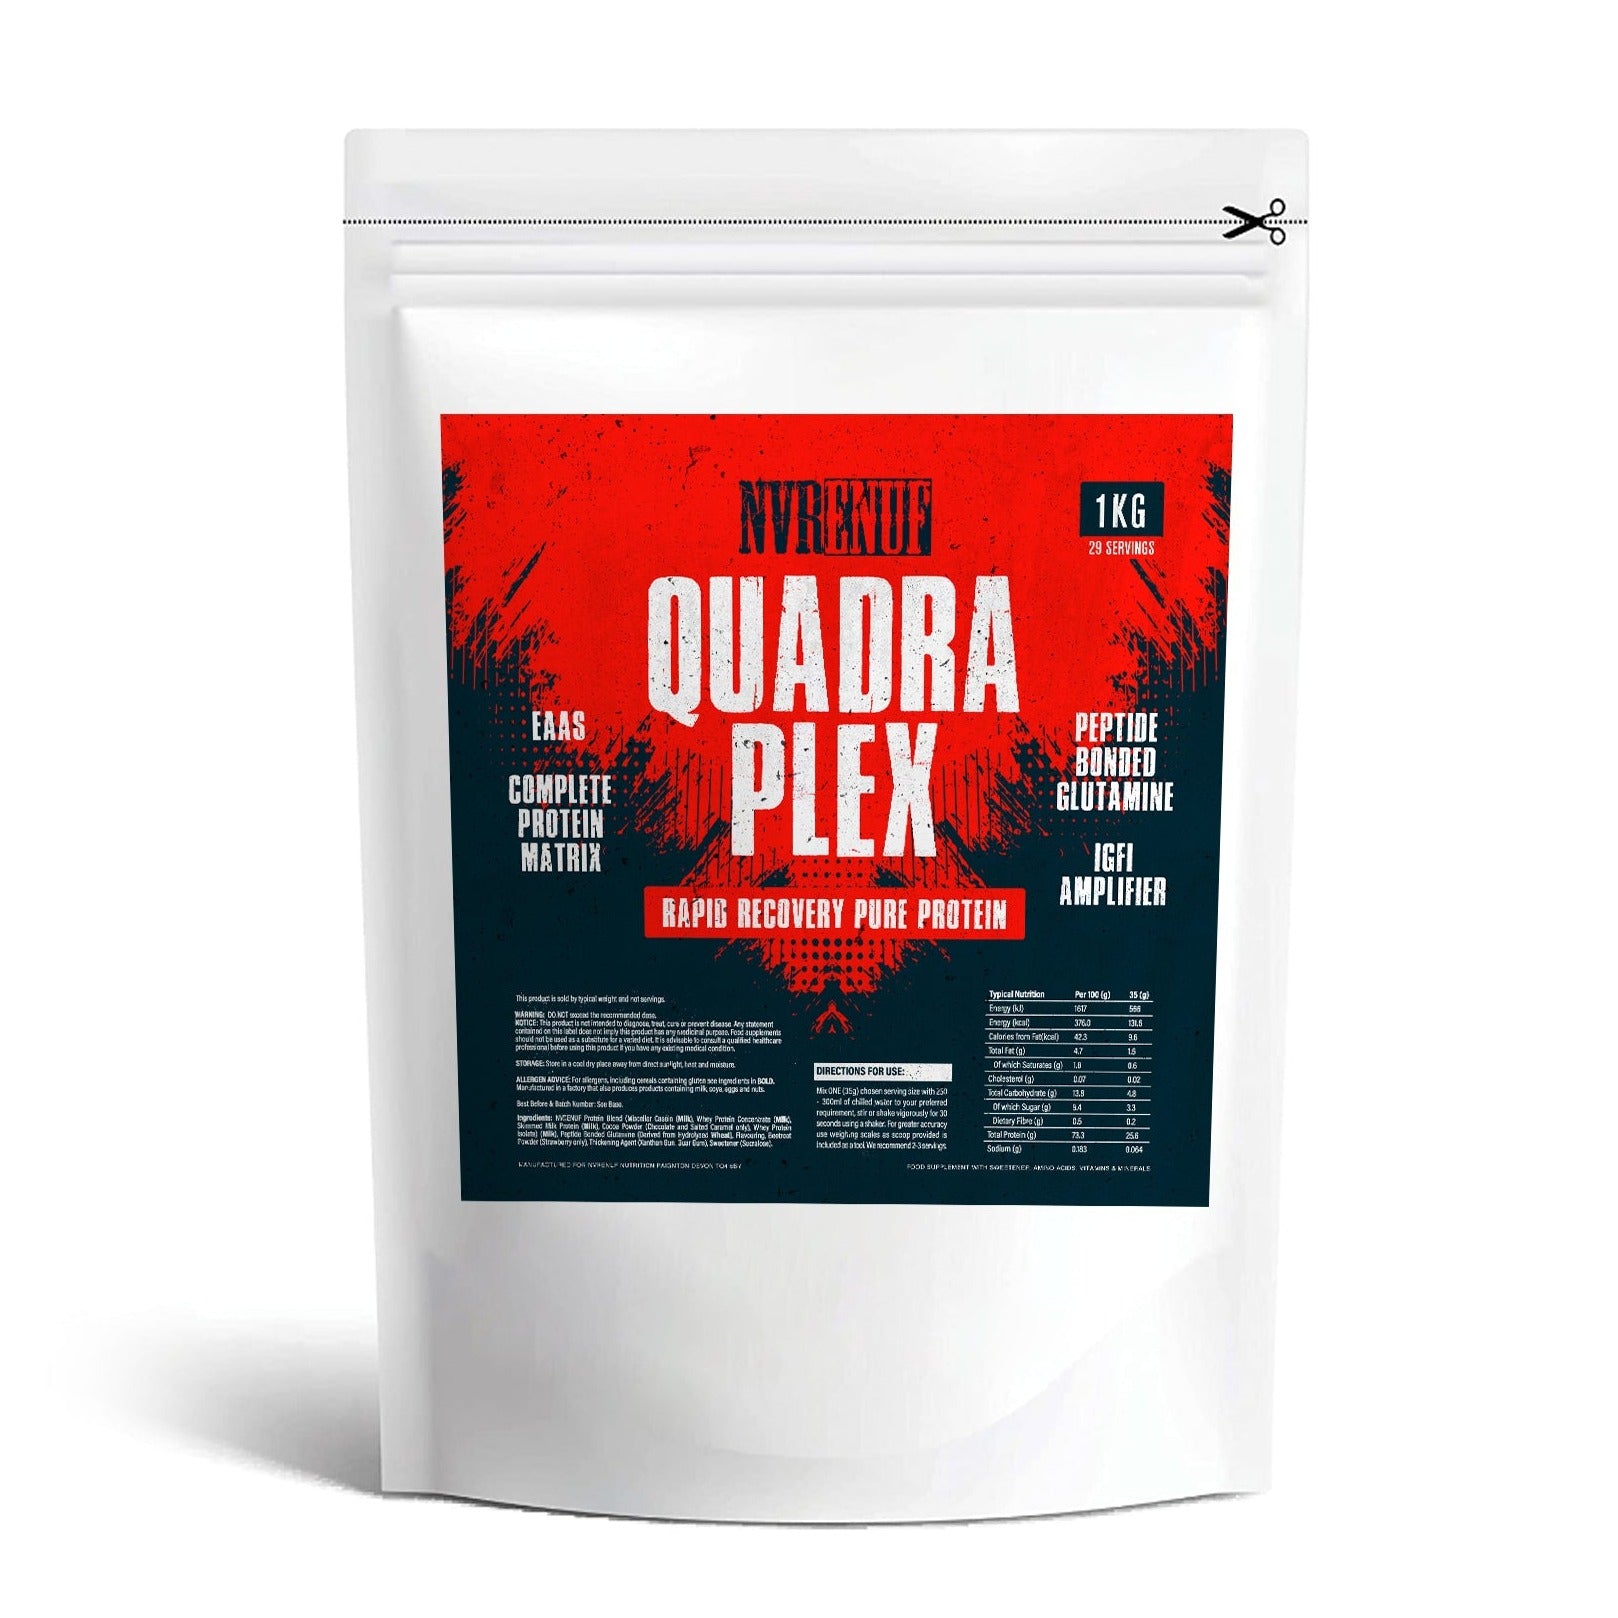 NVRENUF Quadra Plex Pure Protein Complex 29 Servings